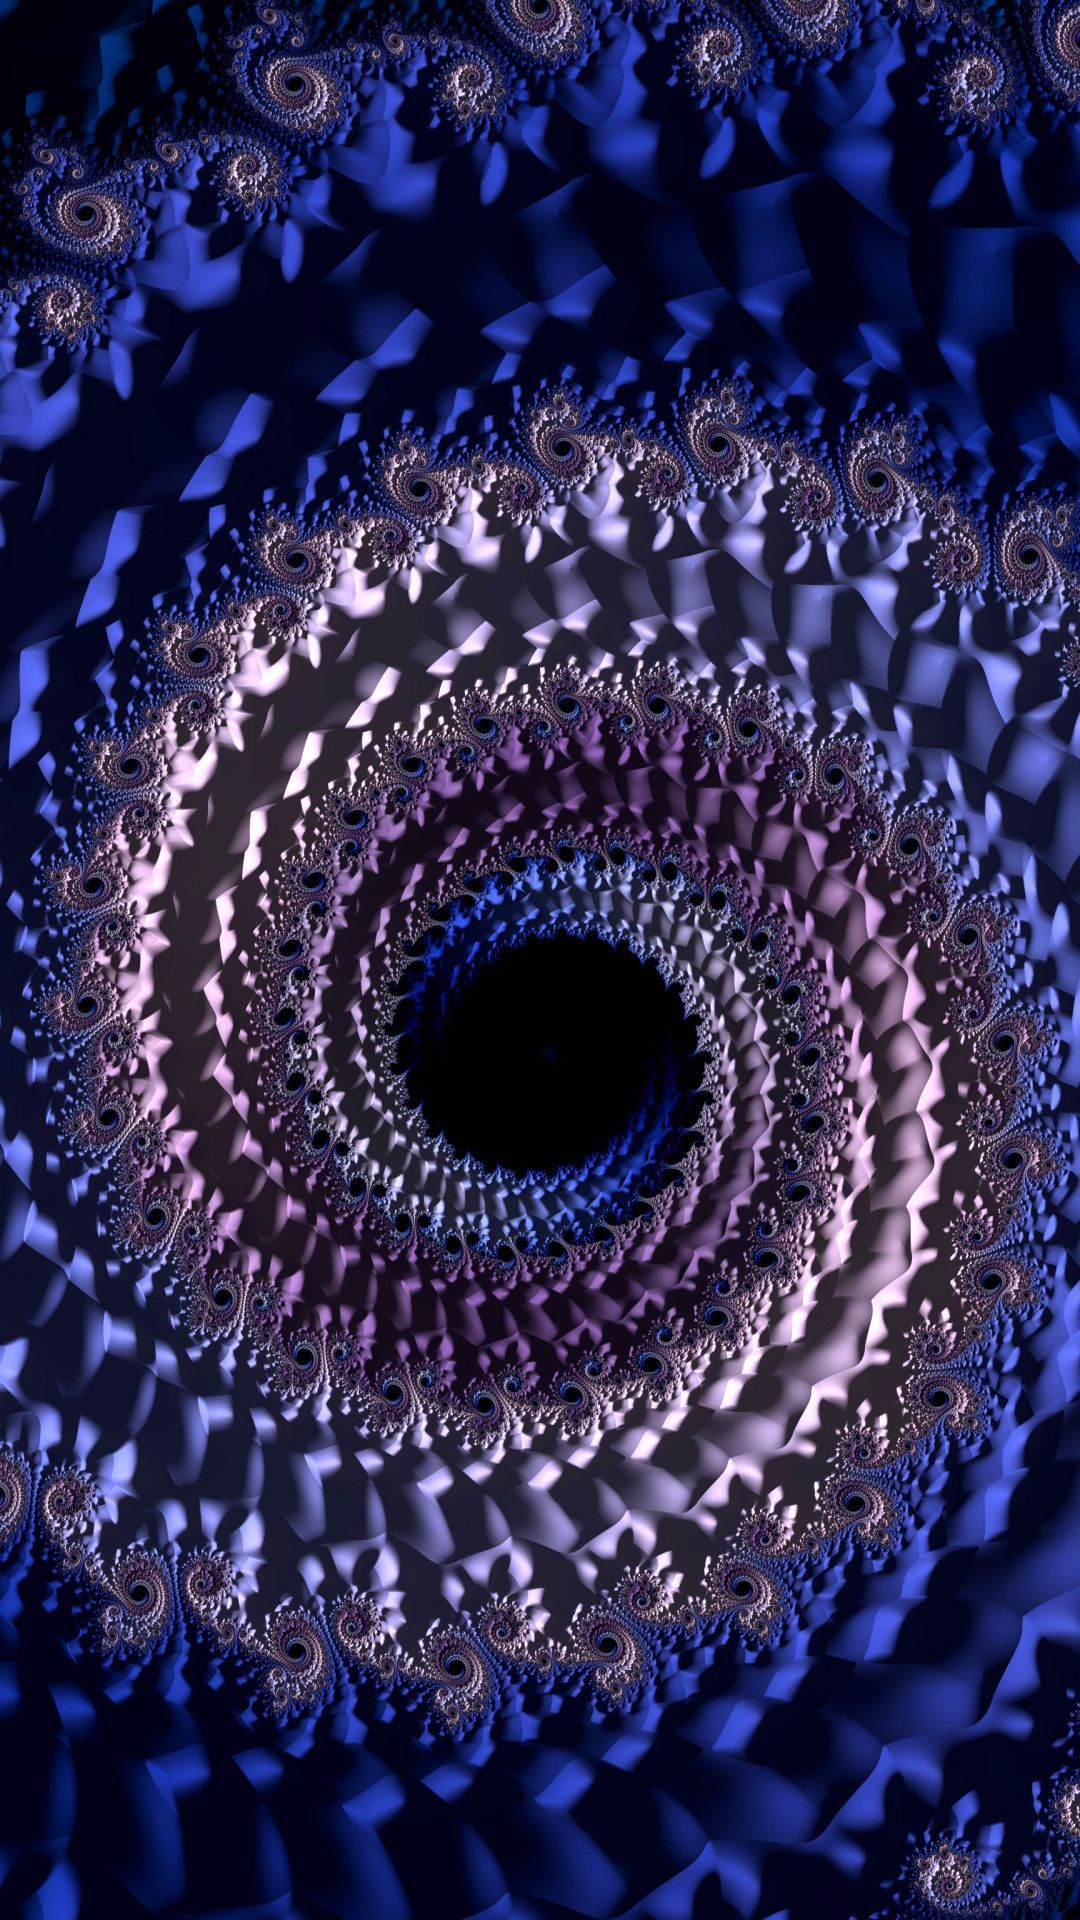 Blue fractal, vortex, swirling, 3D pattern wallpaper,. Fractals, 3D phone wallpaper, Fractal patterns